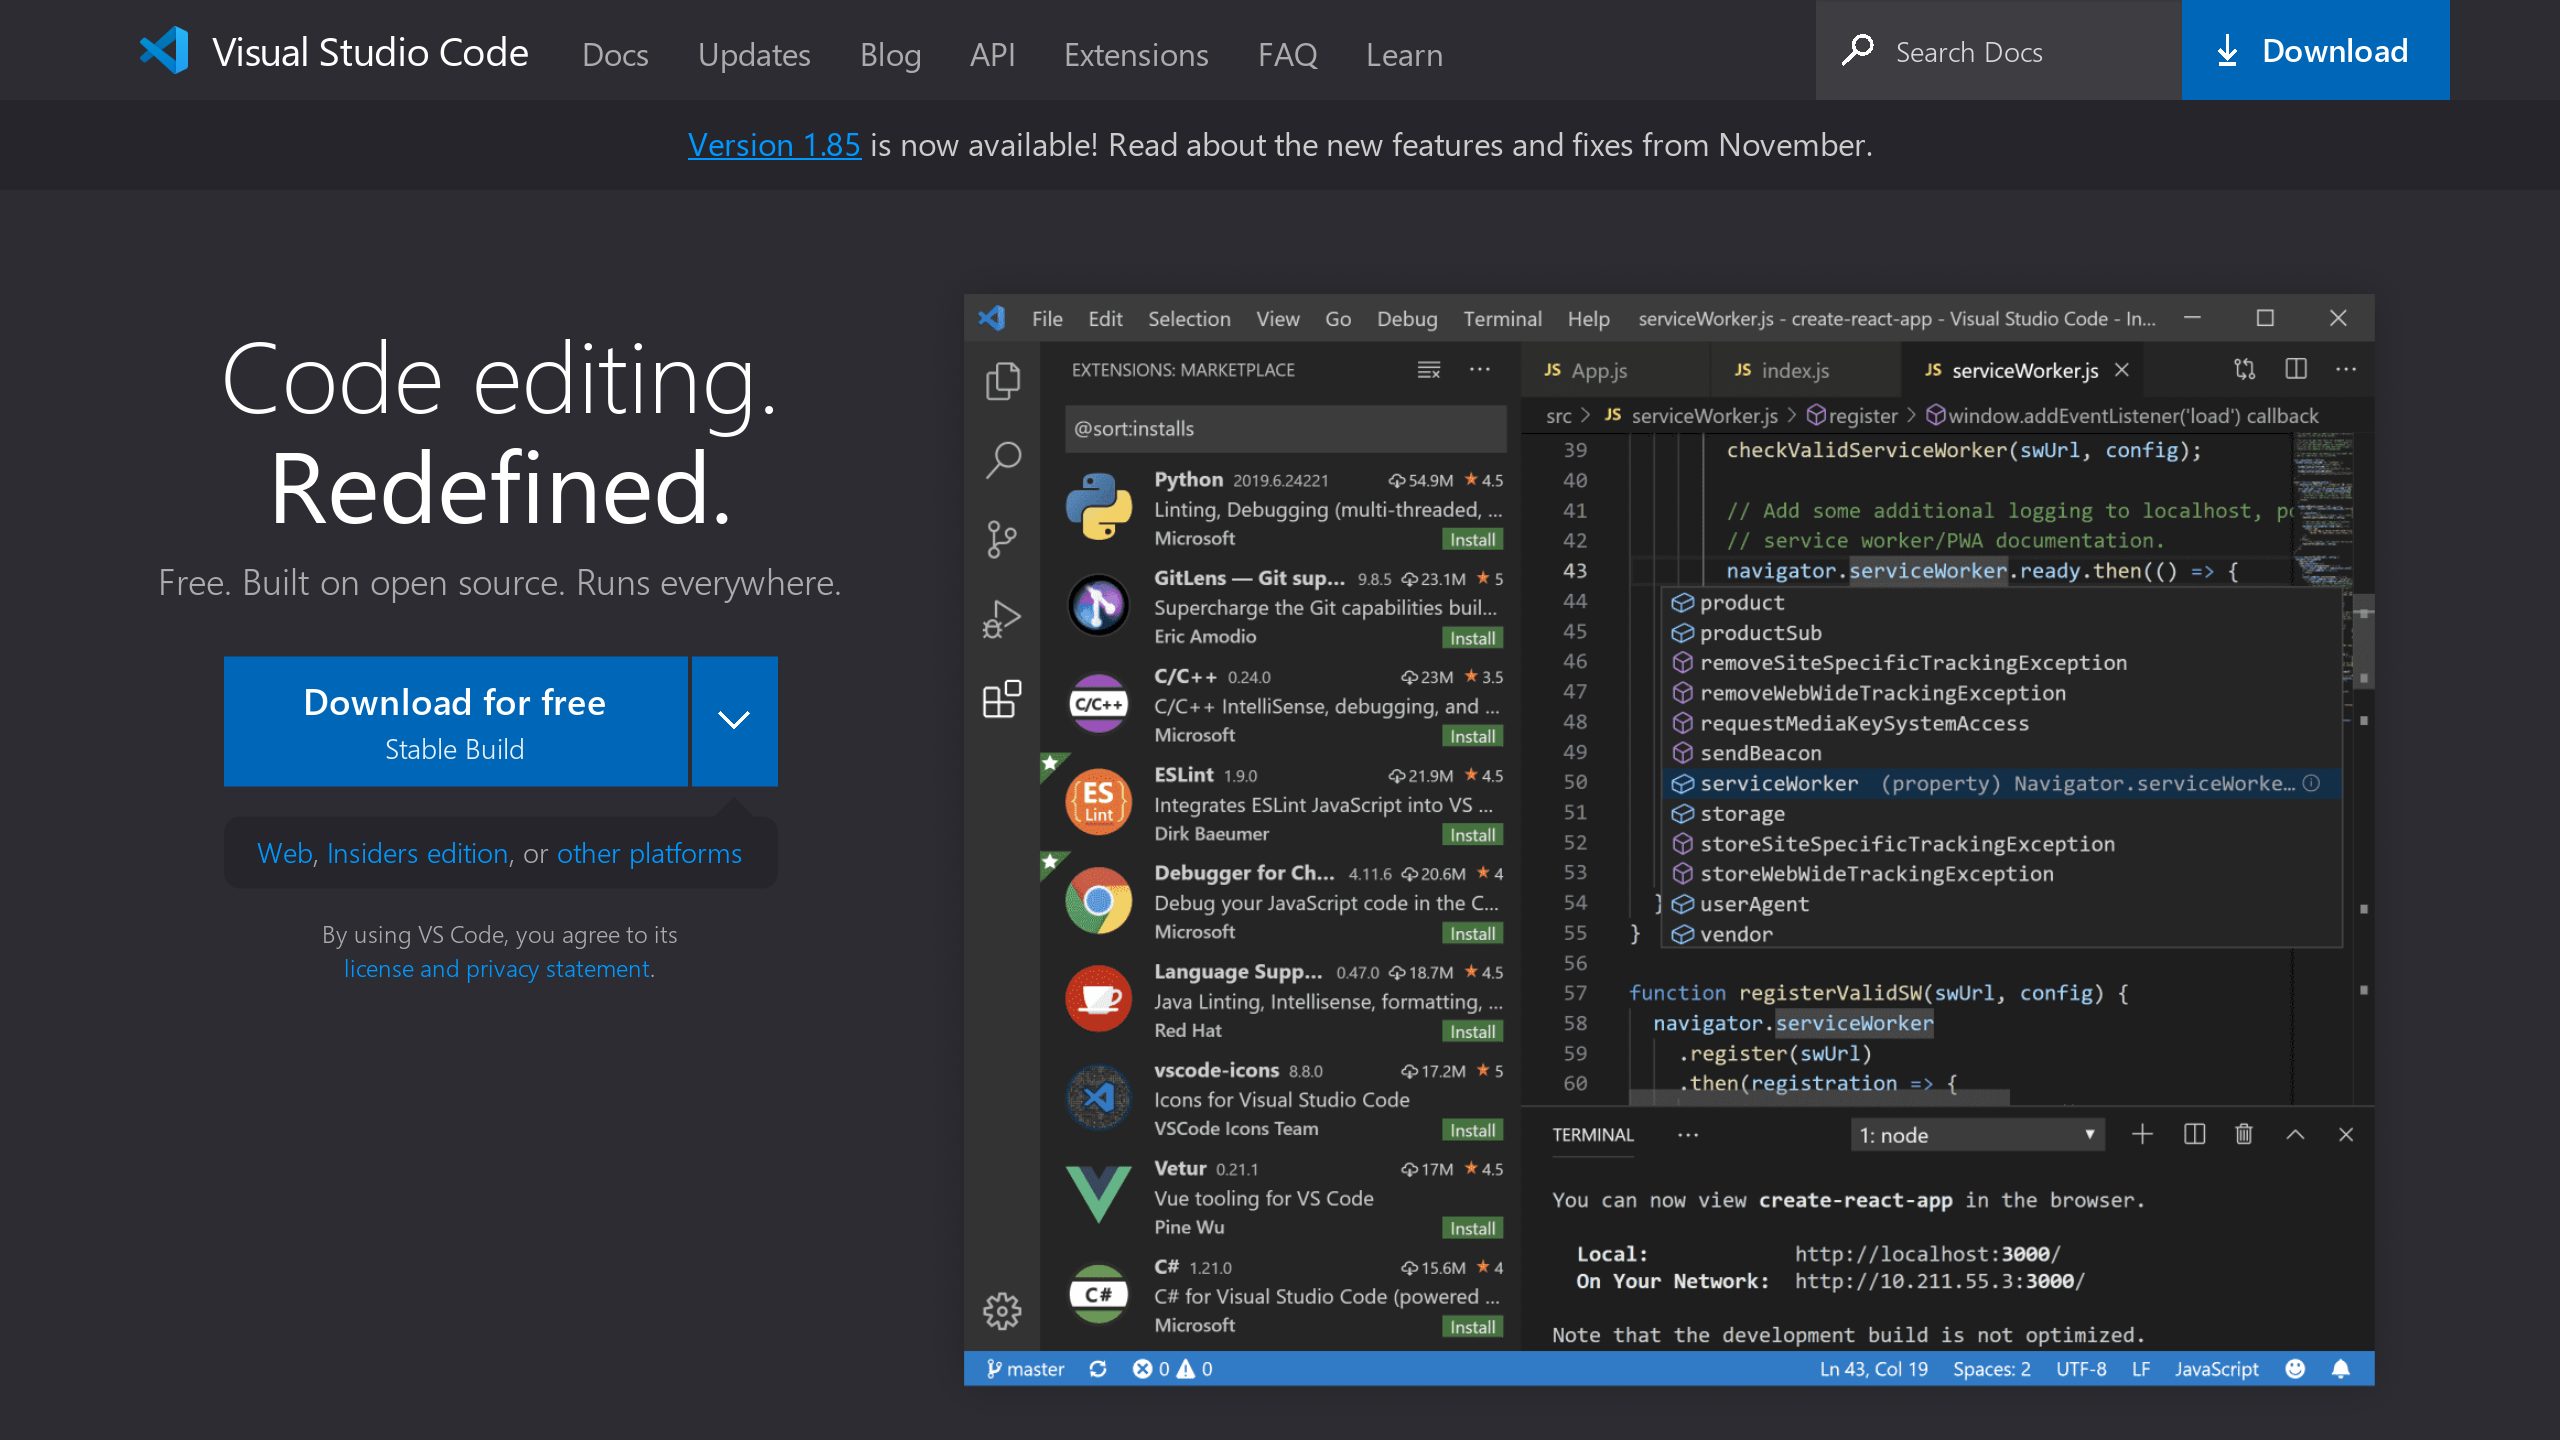 Visual Studio Code's website screenshot